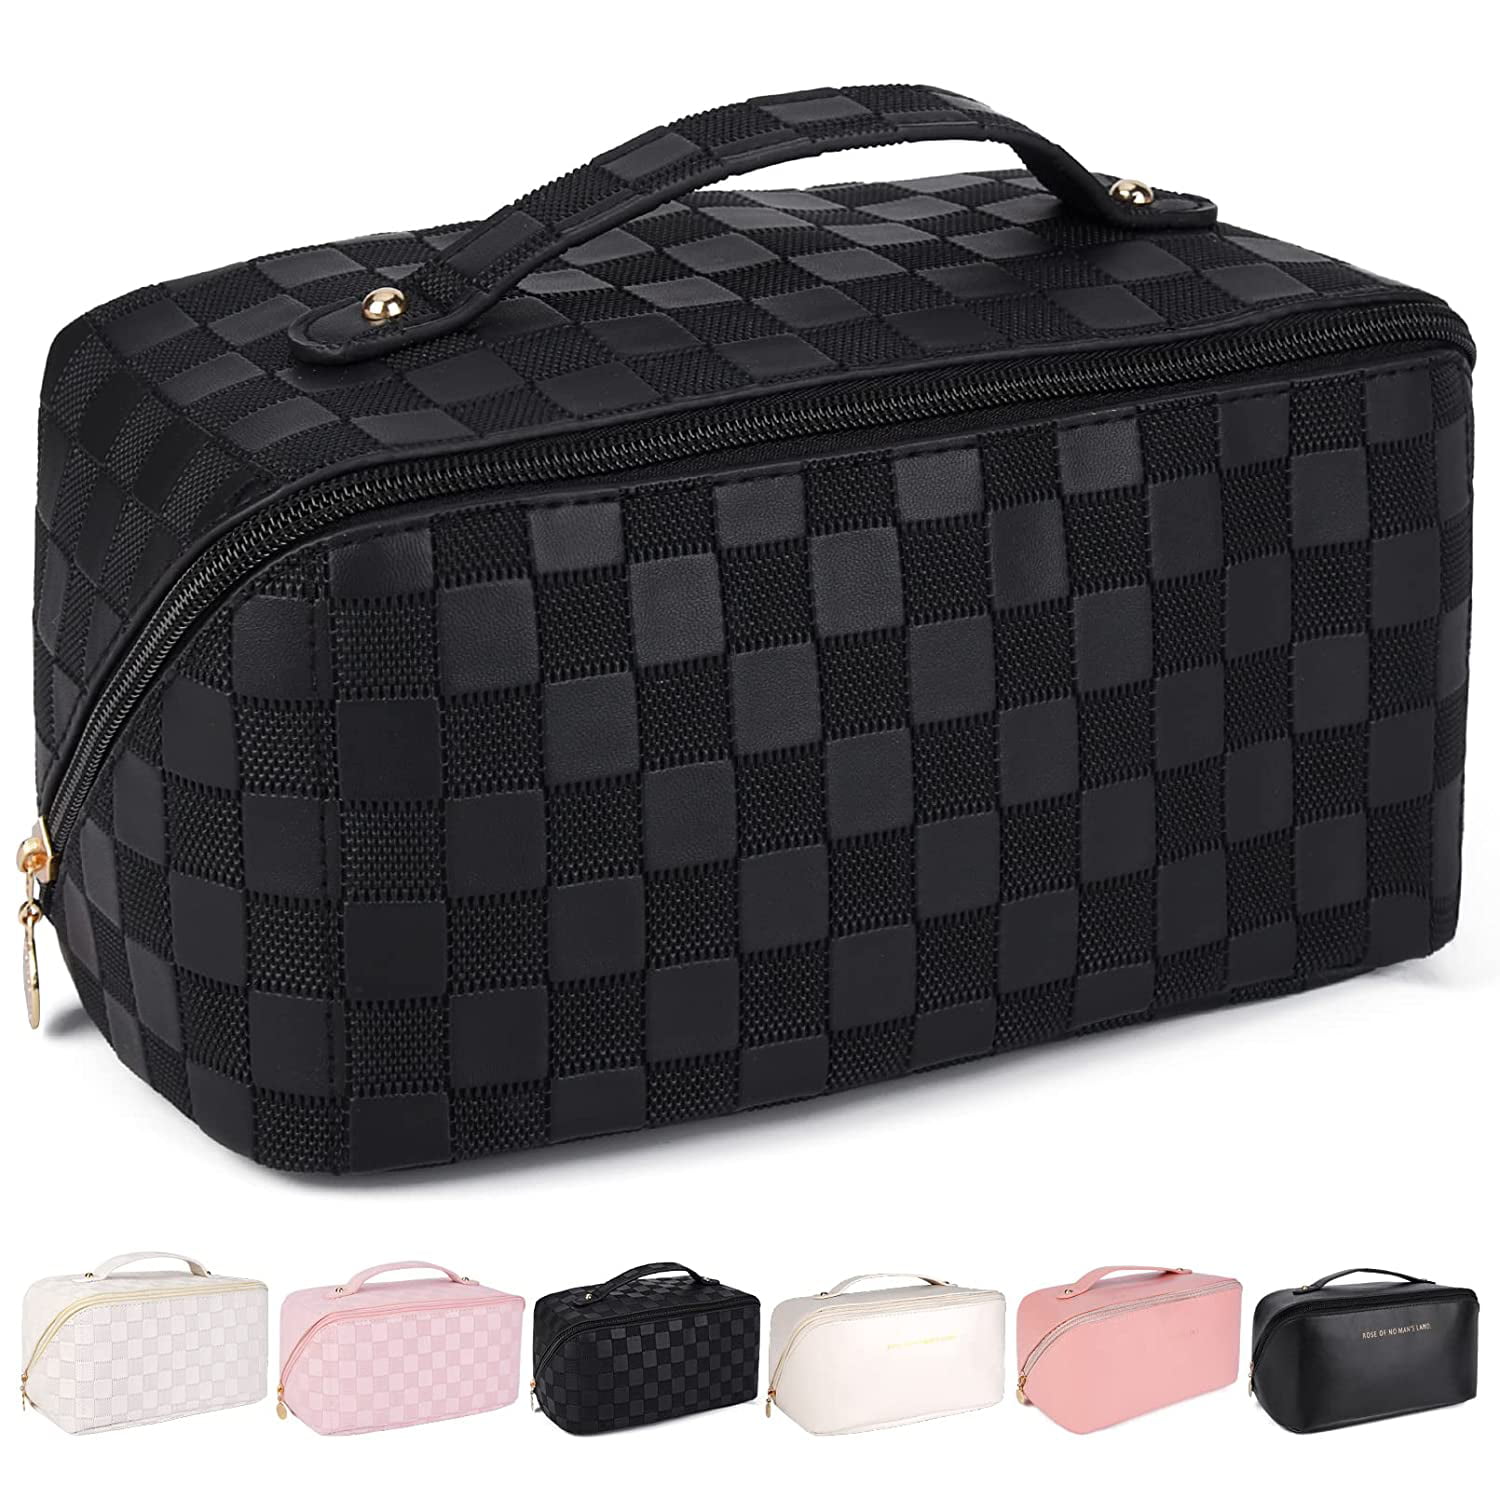 Jlmmen Store Travel Makeup Bag for Women Large Capacity Cosmetic Bag Waterproof Black Checkered Portable PU Leather Toiletry Bag Organizer Makeup